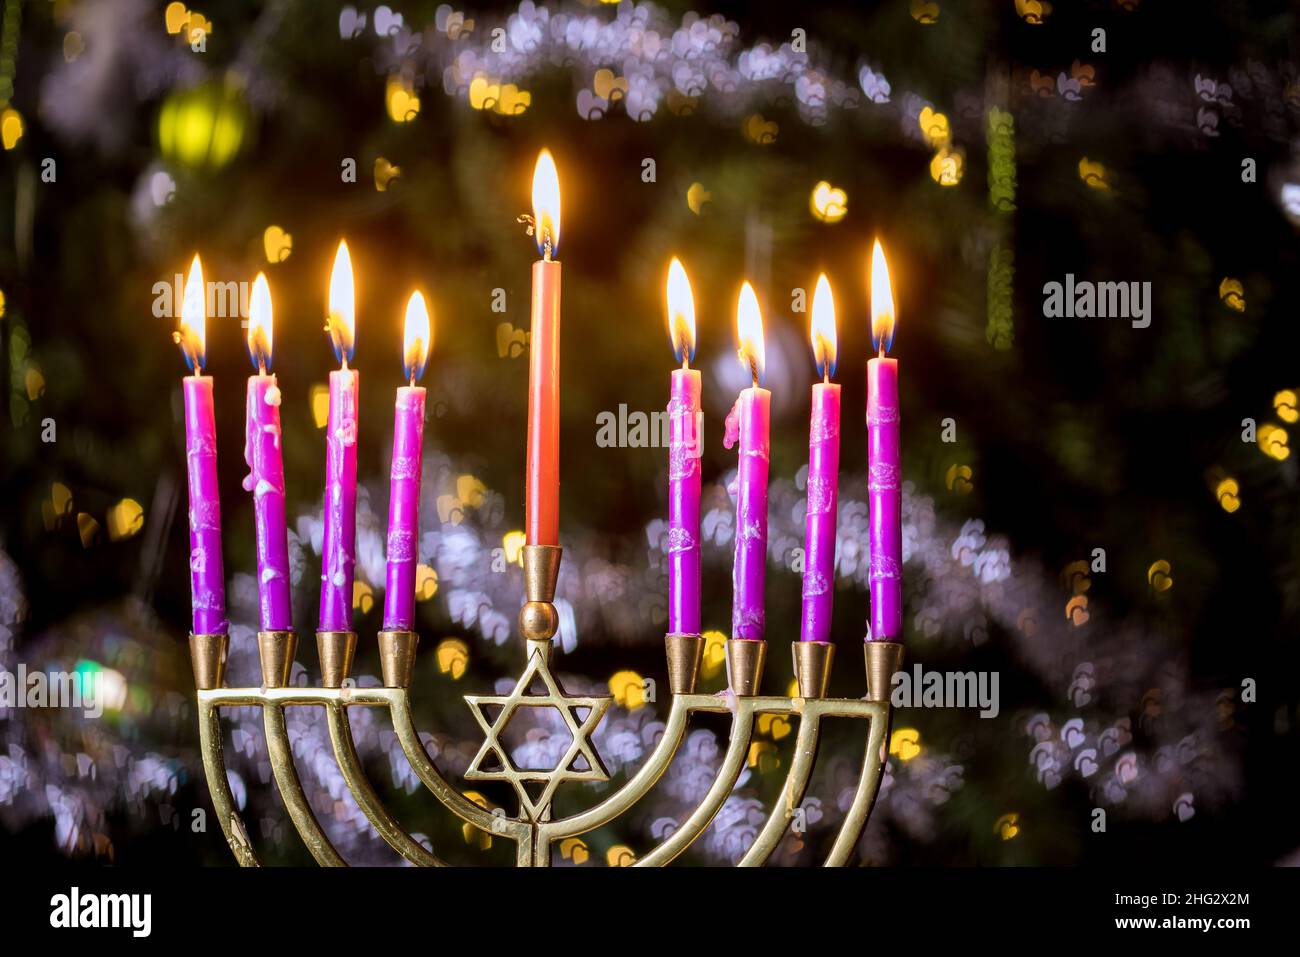 Jewish Religion holiday symbol for Hanukkah in hanukkiah Menorah with burned out candles Stock Photo